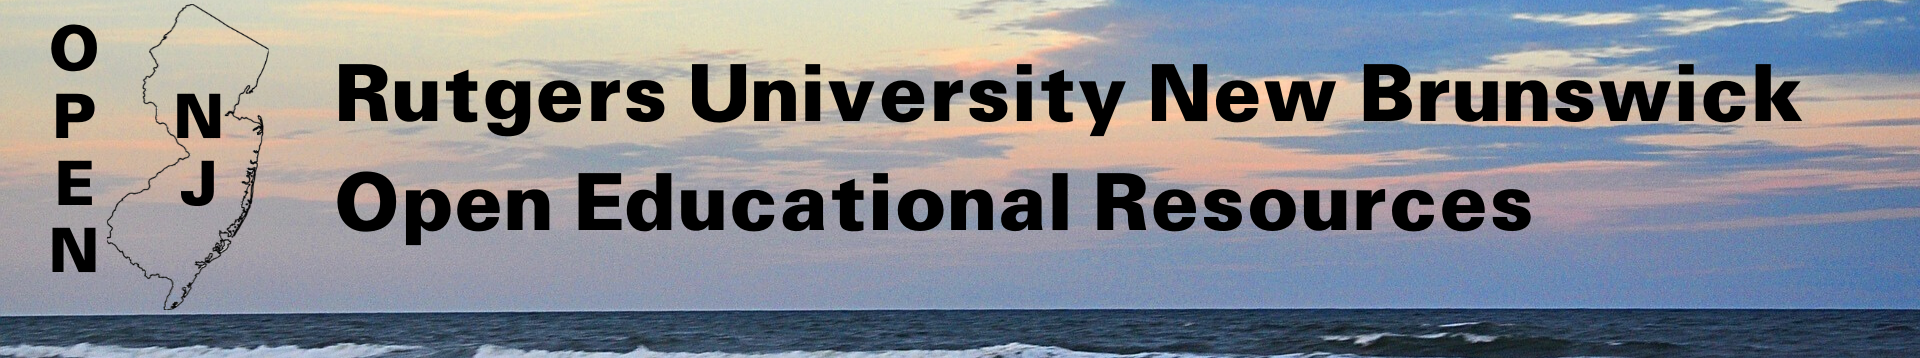 Rutgers University, New Brunswick